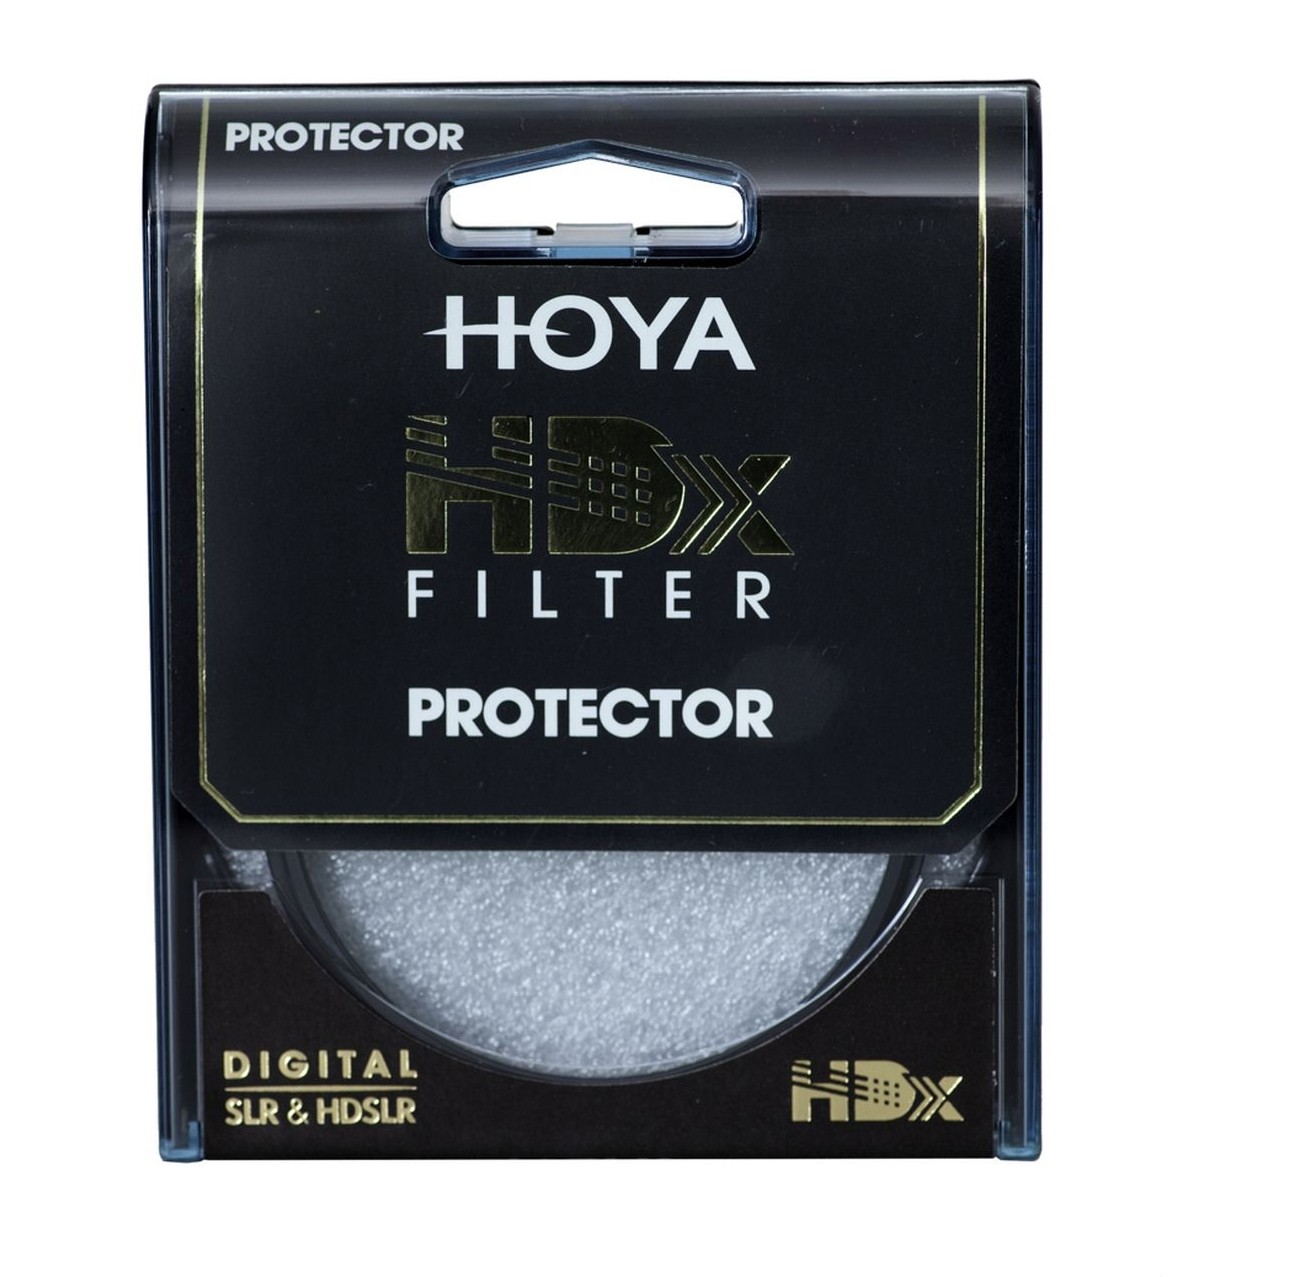 Hoya 82mm HDX Protector